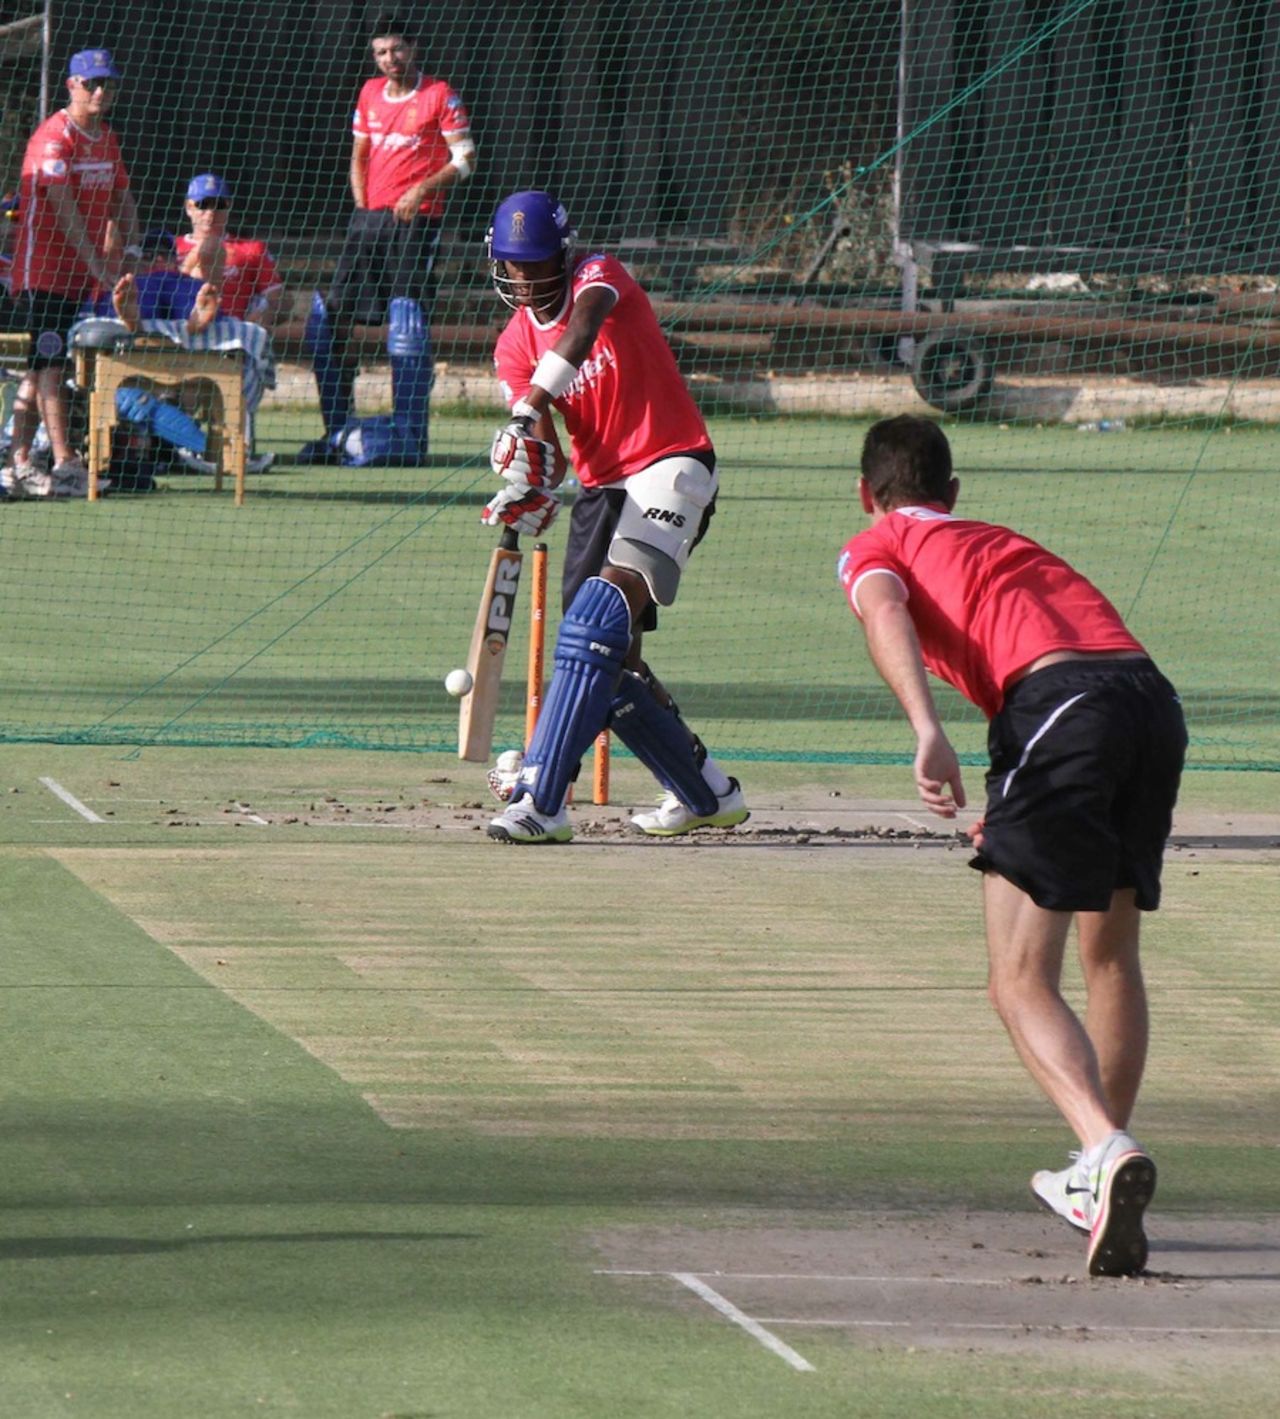 Shaun Tait bowls to Kevon Cooper during a practice session at the Sawai Mansingh Stadium in Jaipur